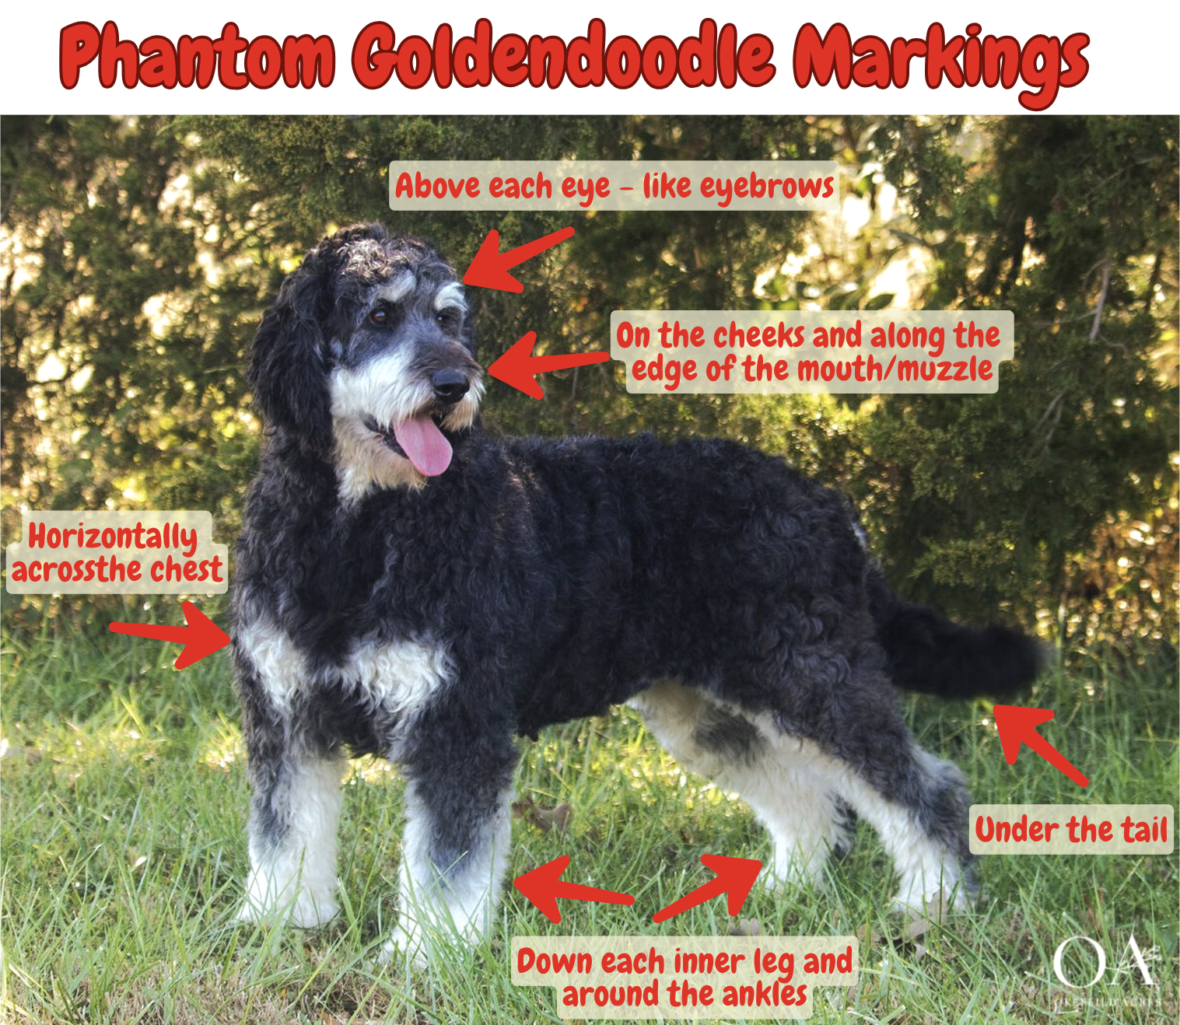 phantom goldendoodle markings